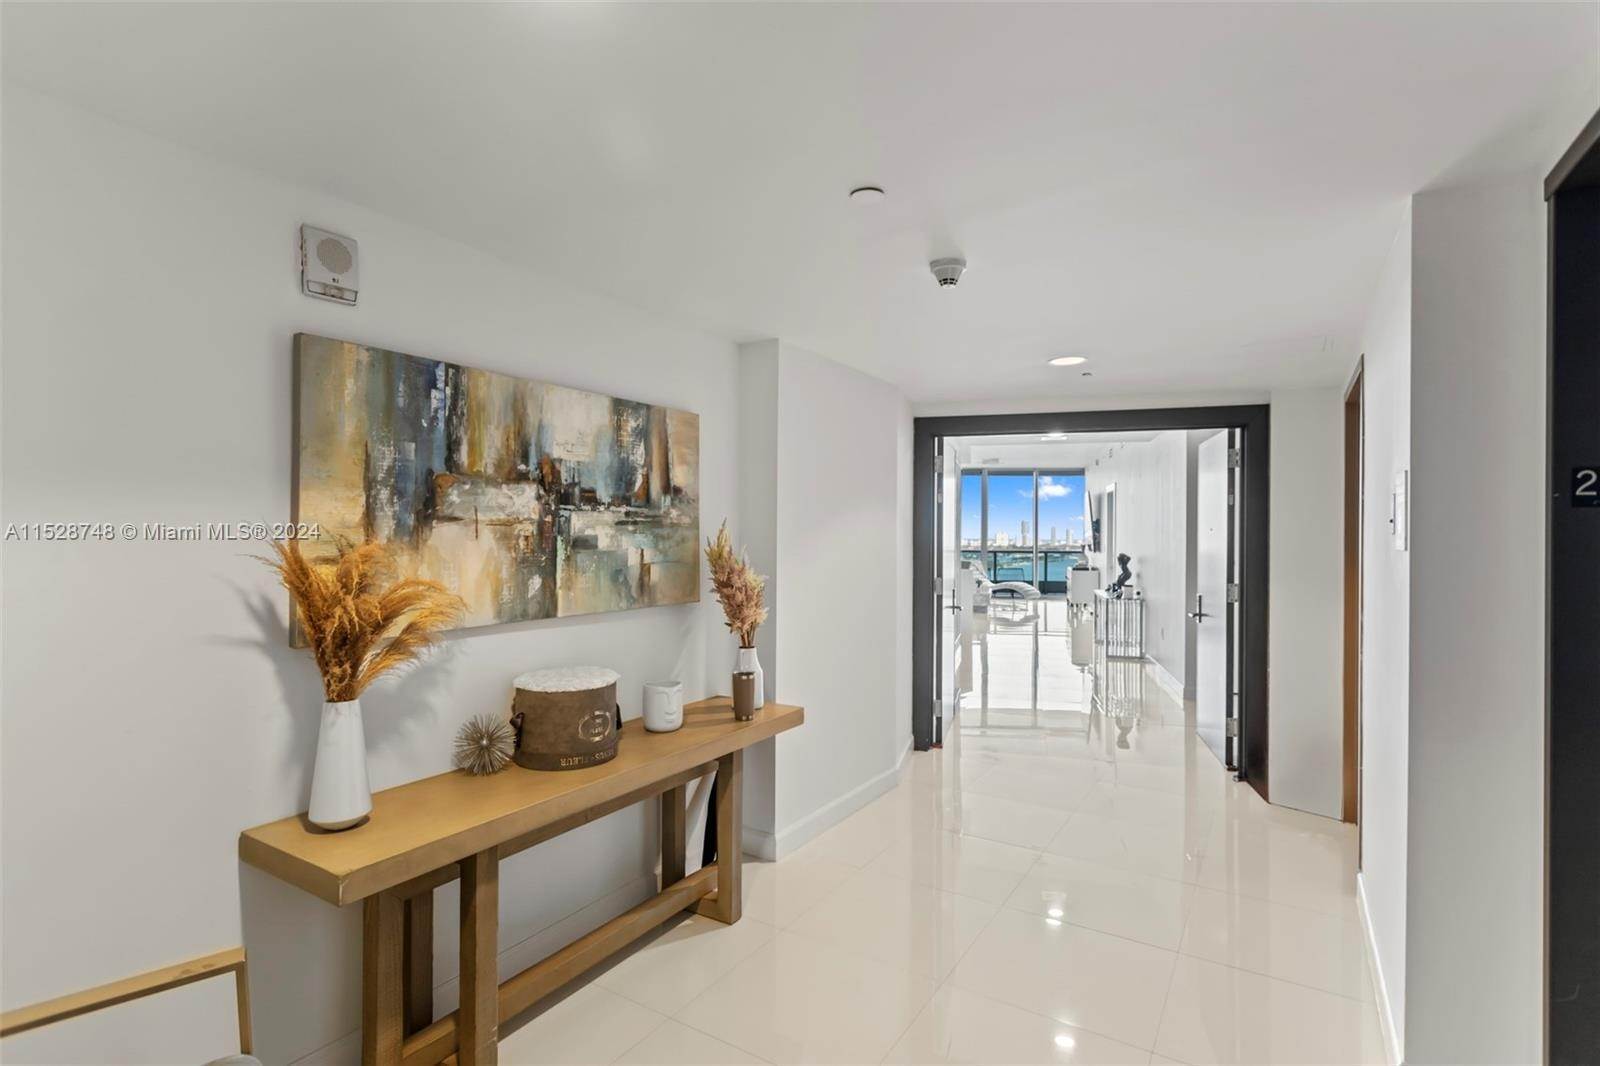 Condominiums for Sale at Miami, FL 33132